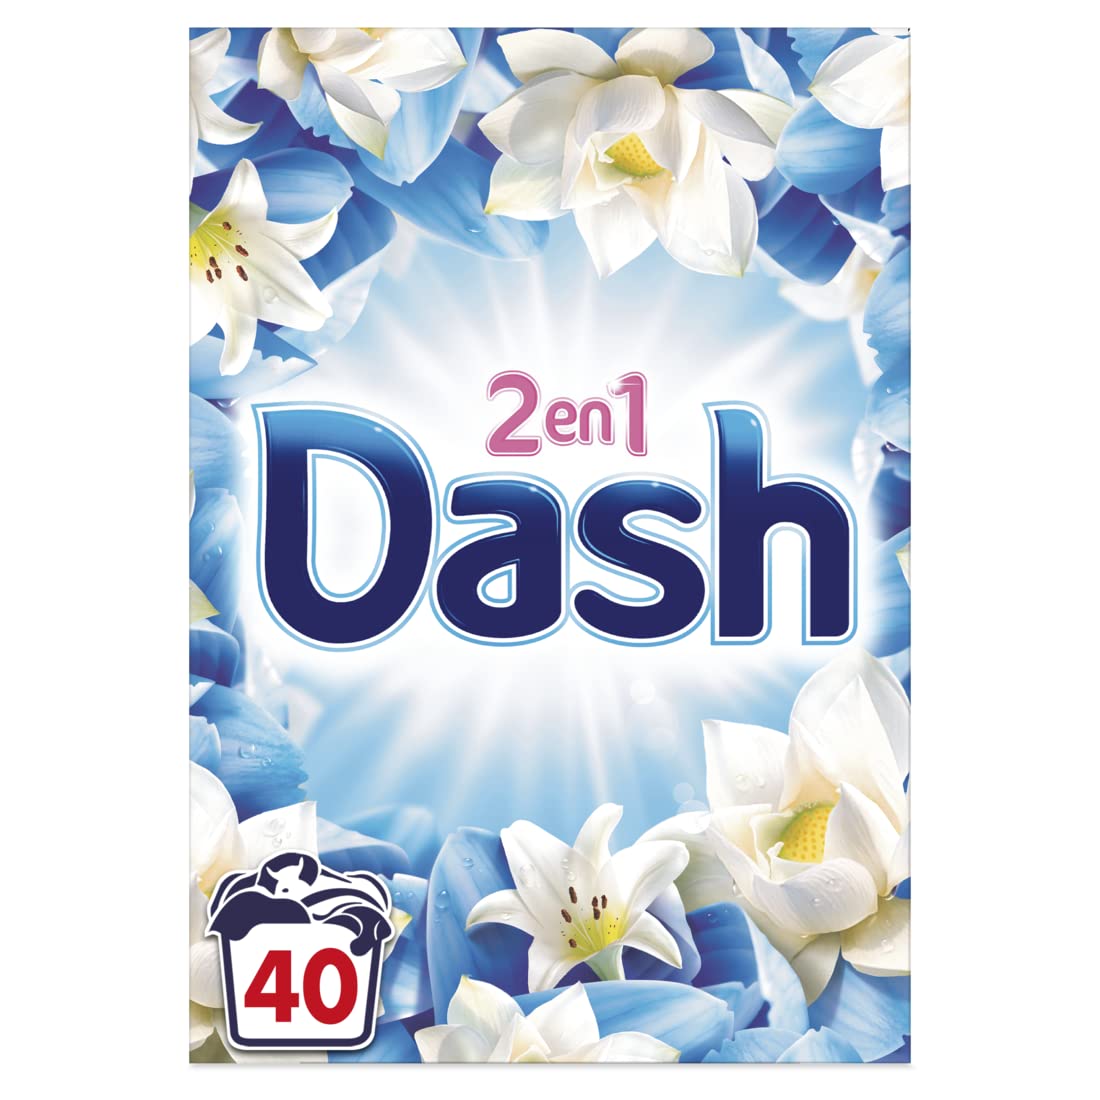 Dash 2en1 Fleur de Lotus & Lys Poudre